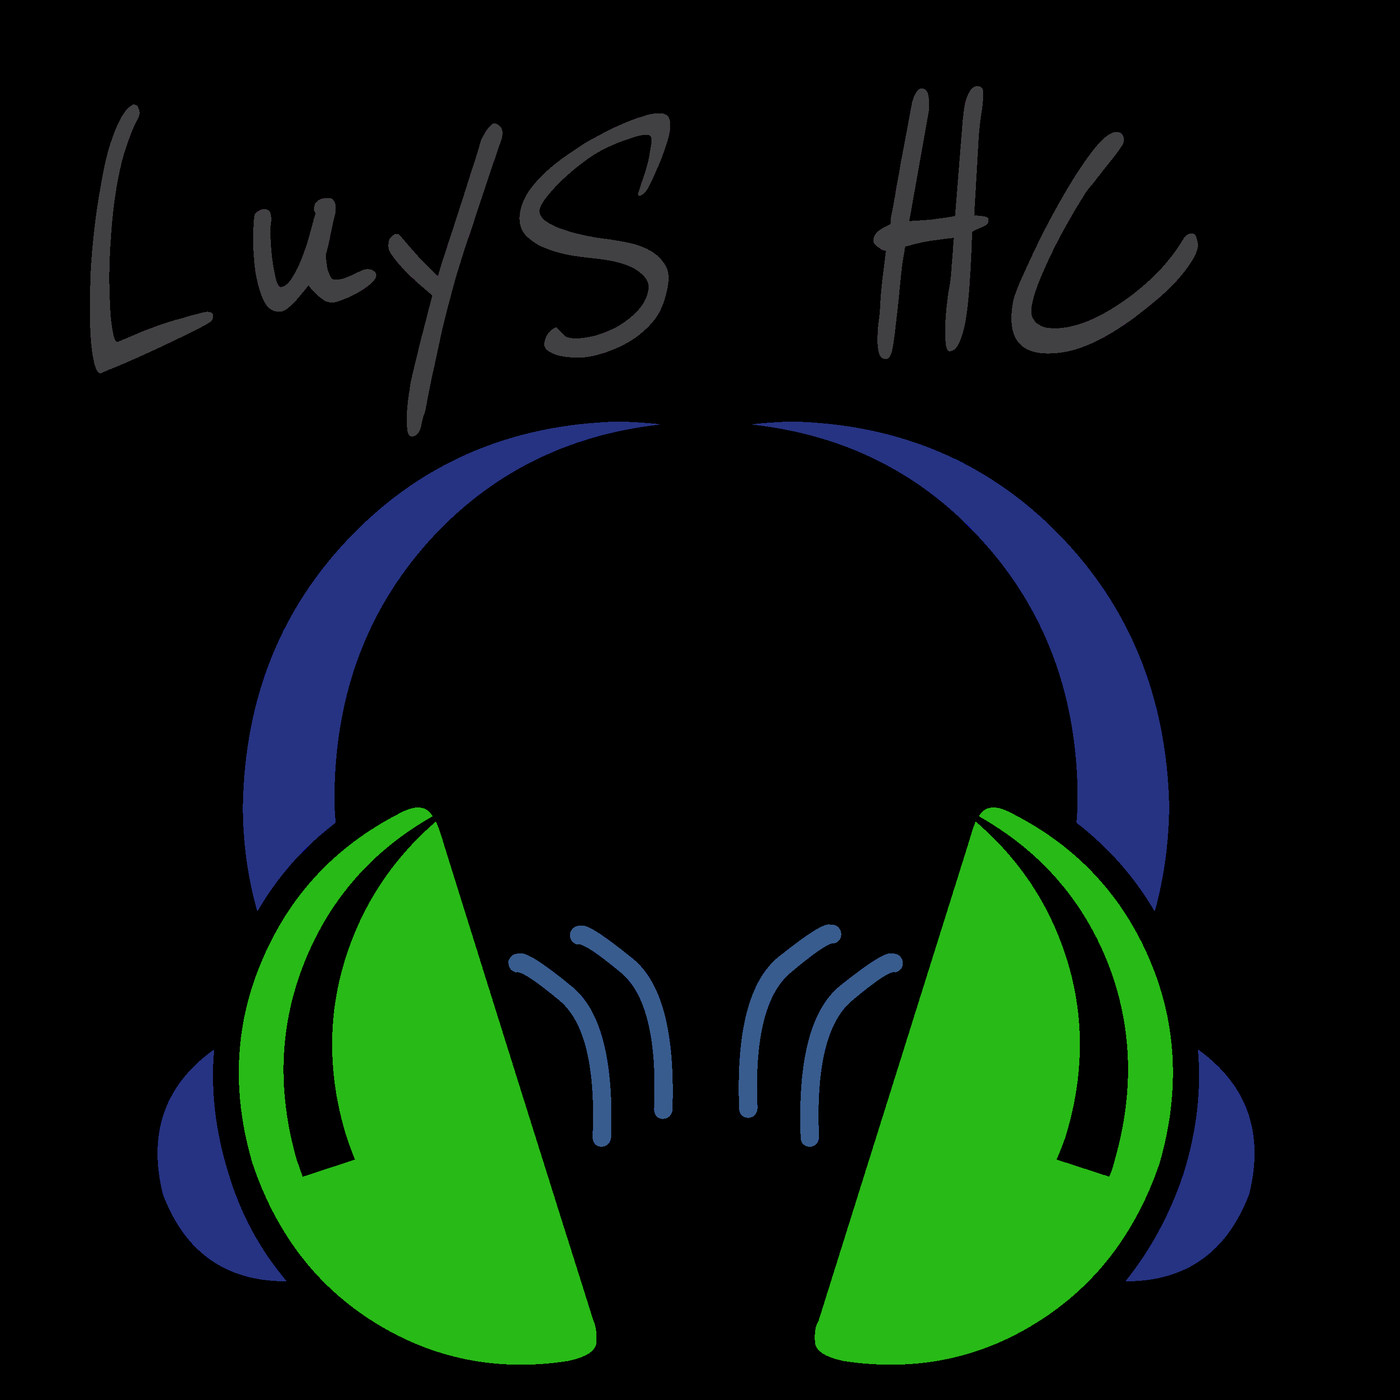 LuyS HC -Marzo- 2019 @CerveZetas